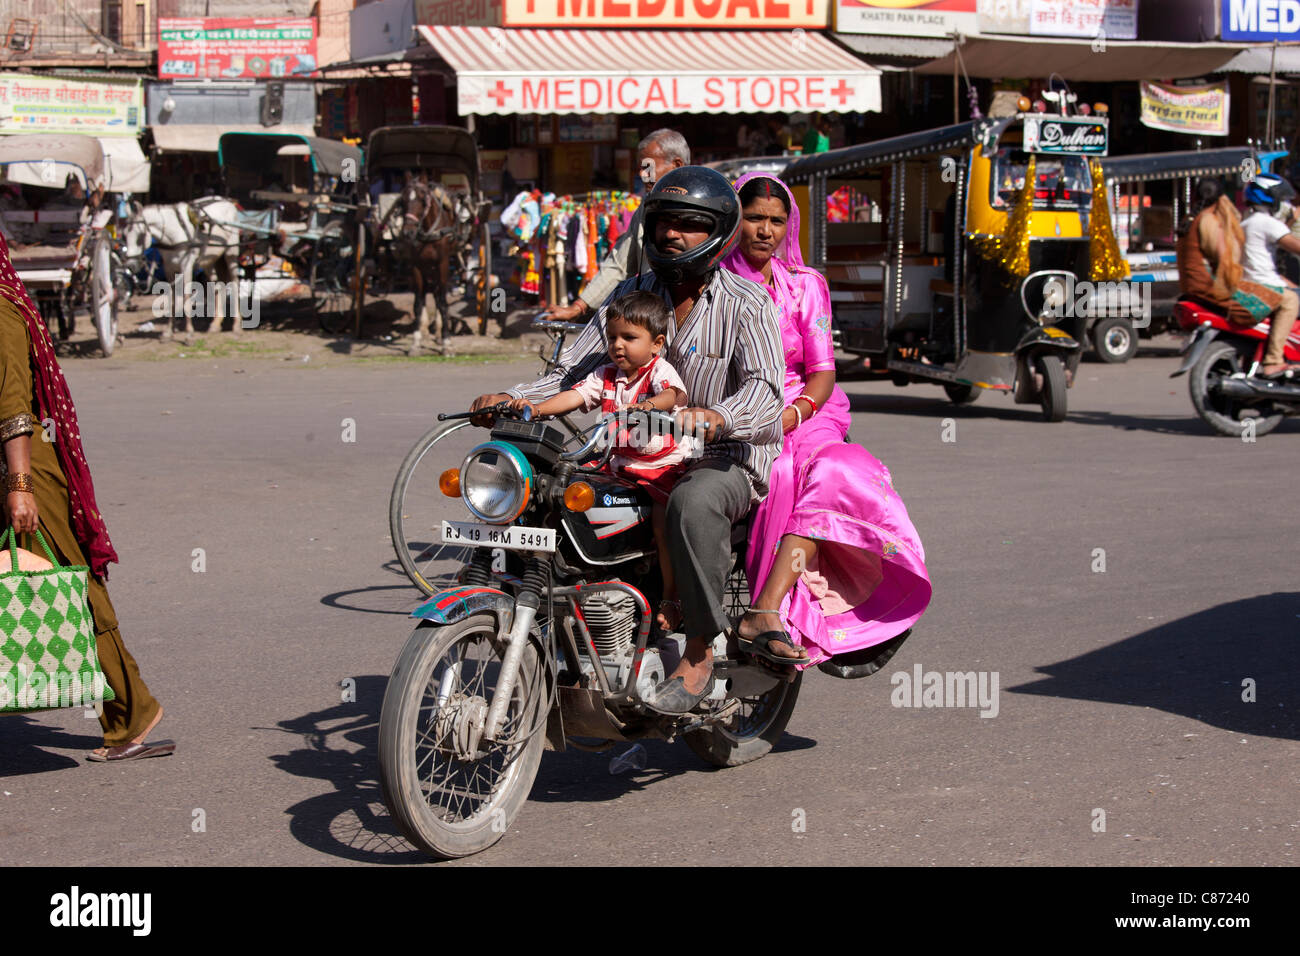 Famiglia indiana riding motociclo, scene di strada a Sardar Mercato a Girdikot, Jodhpur, Rajasthan, India settentrionale Foto Stock